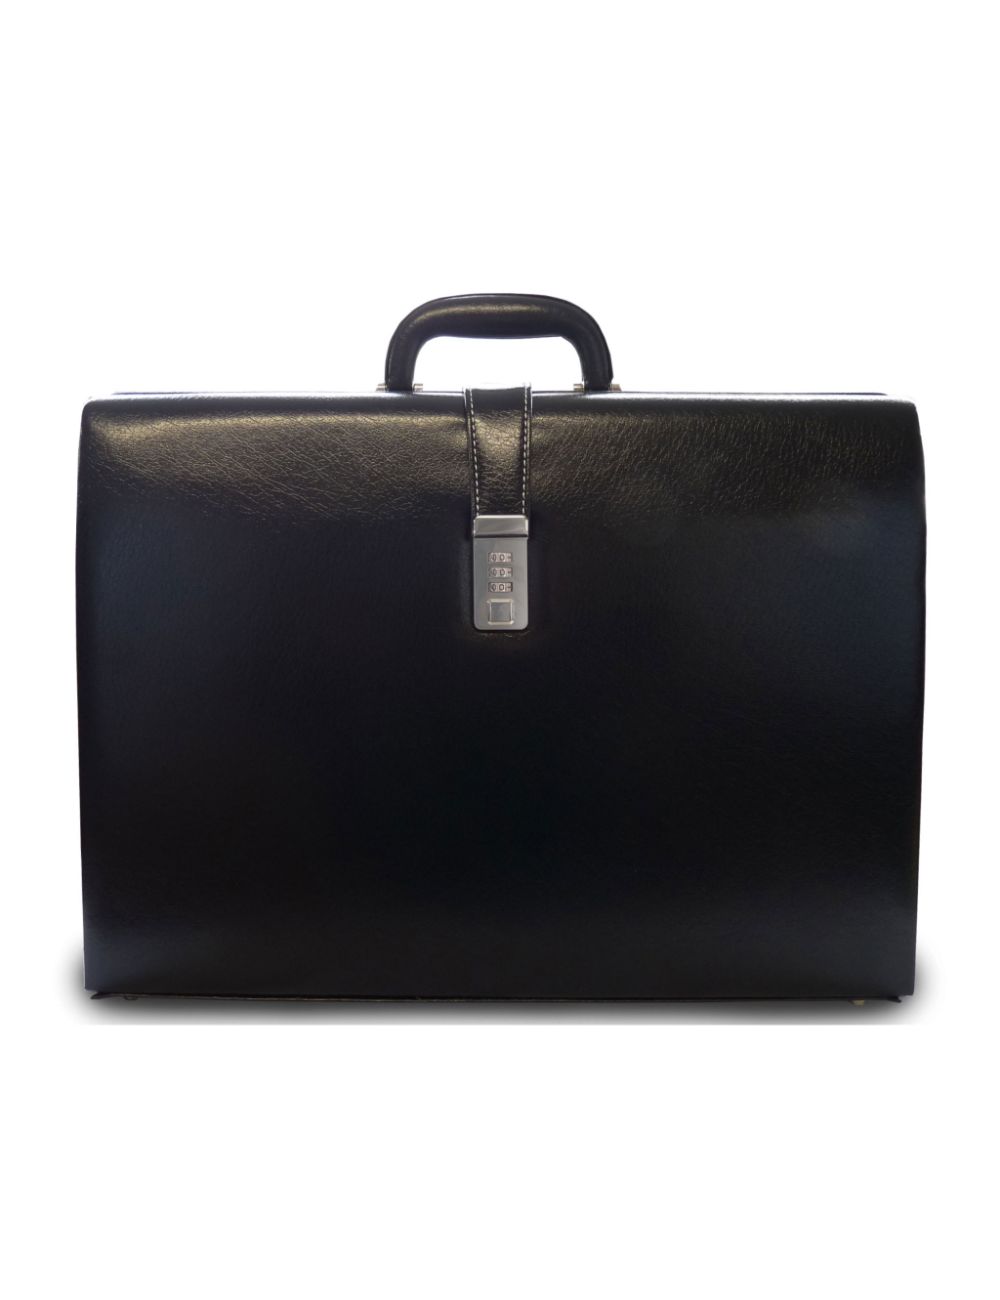 Roamlite Executive Briefcase Black Pu Leather RL919  front